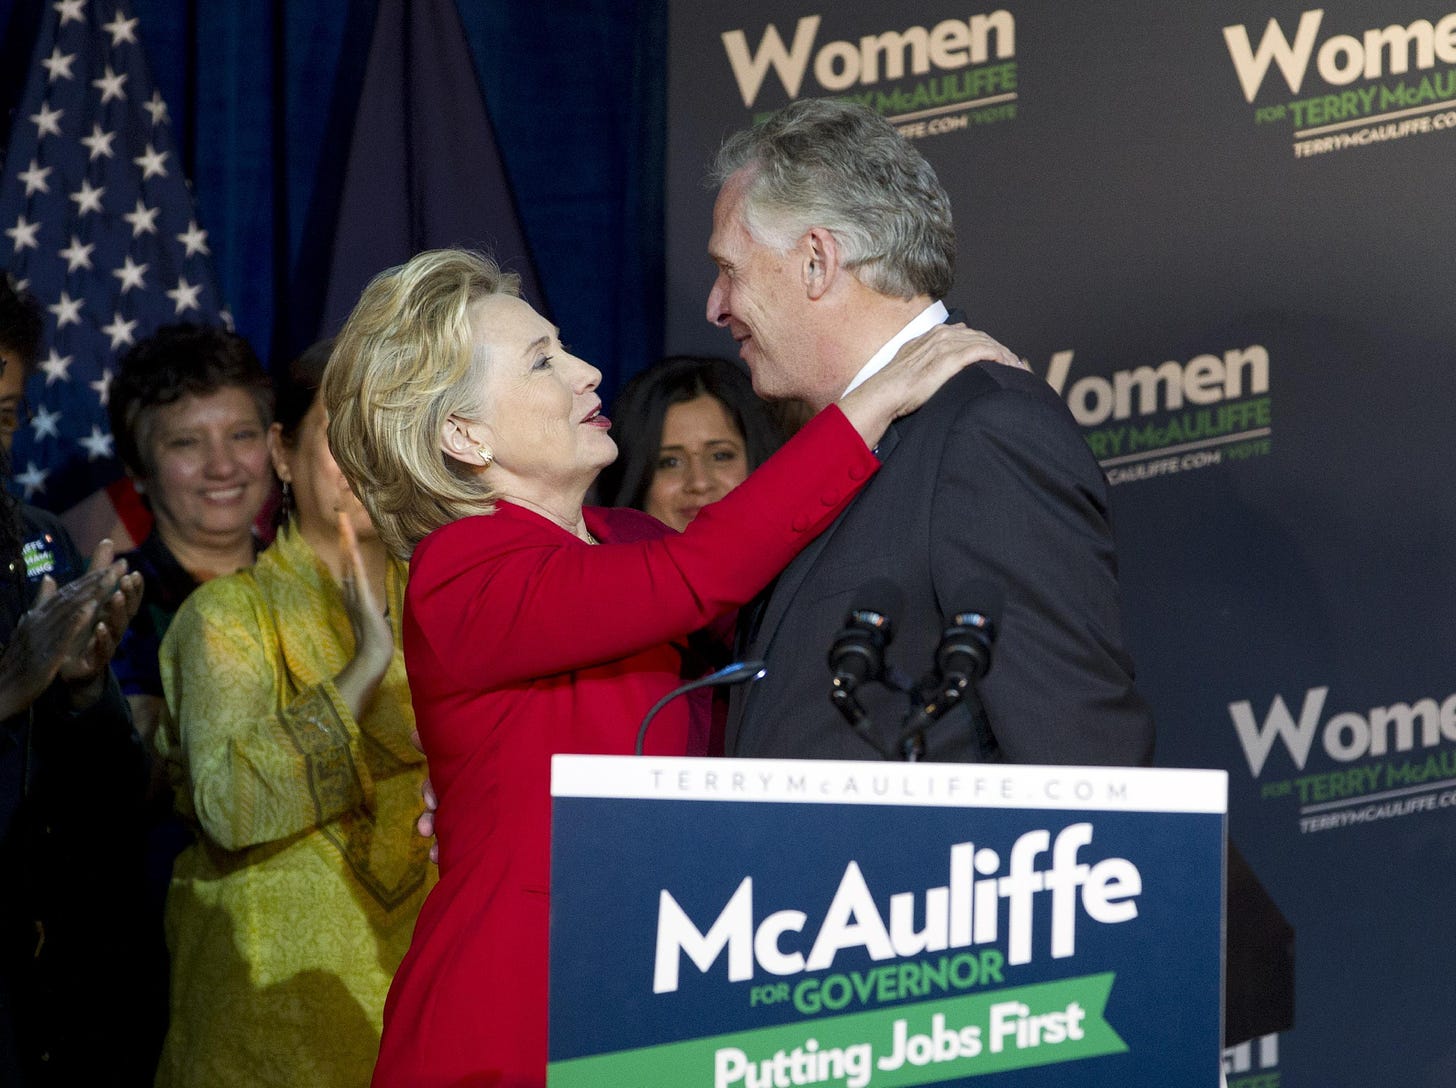 Hillary Clinton campaigns in VA for McAuliffe